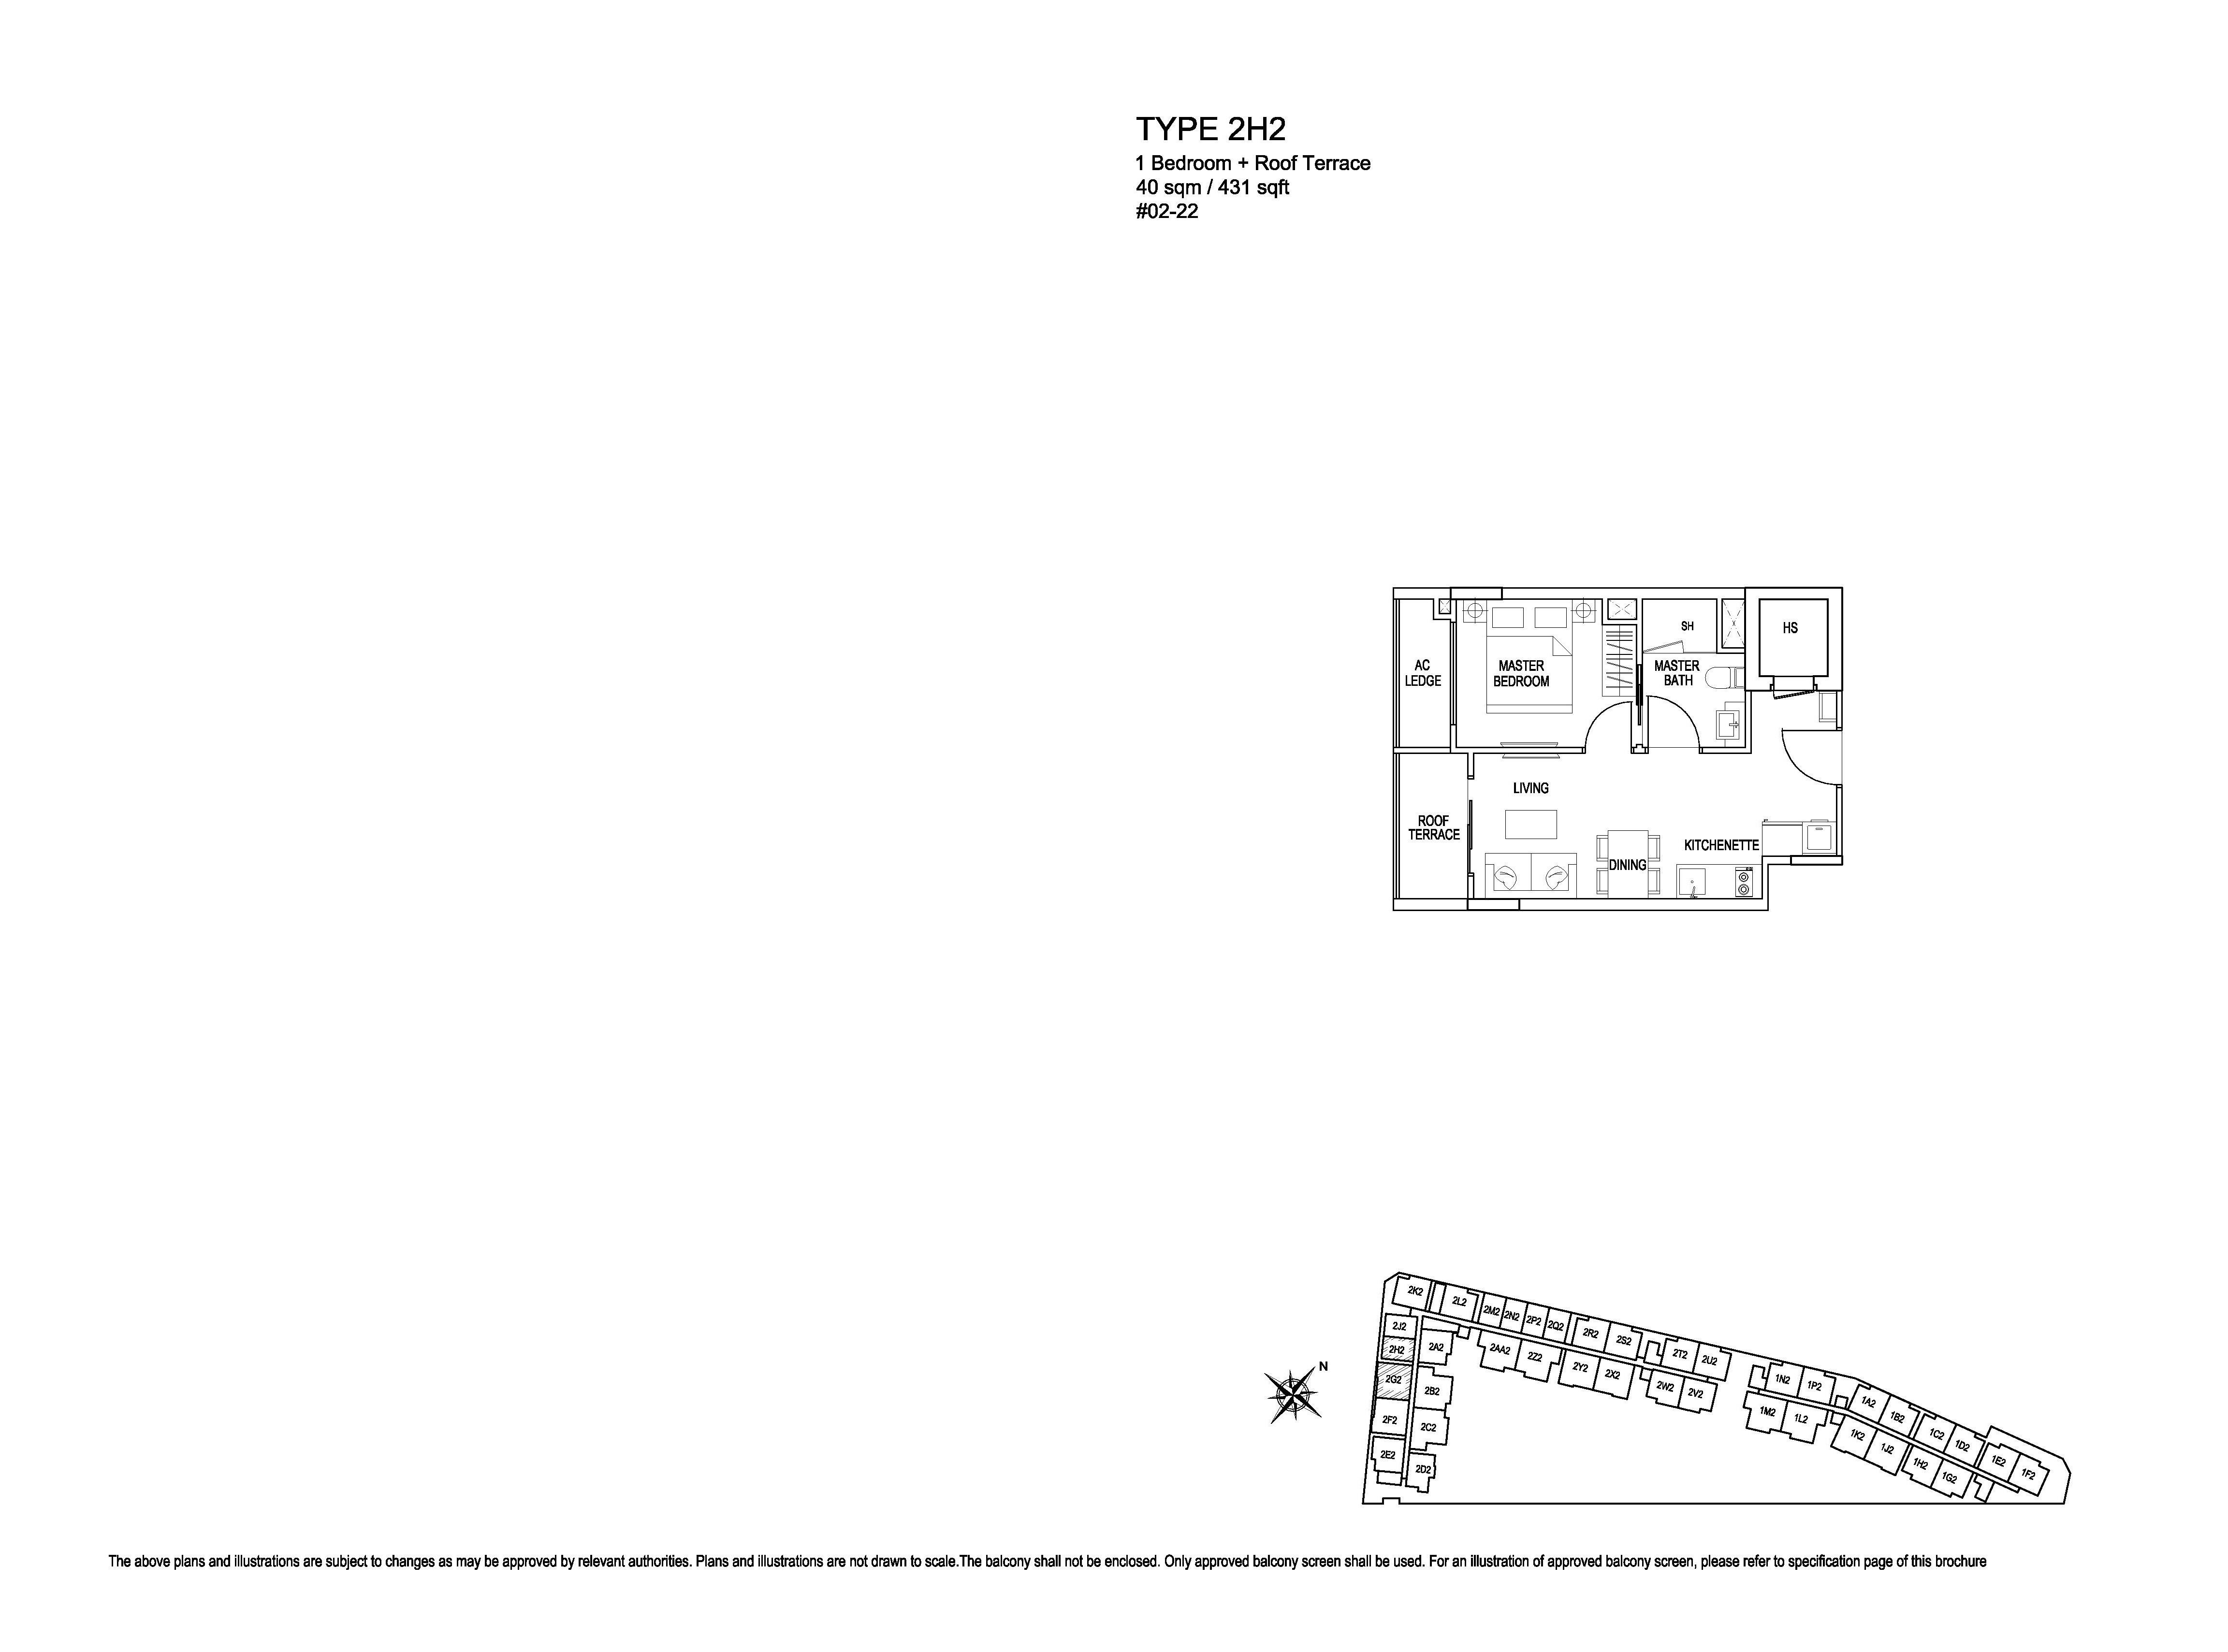 Kensington Square 1 Bedroom Floor Plans Type 2H2